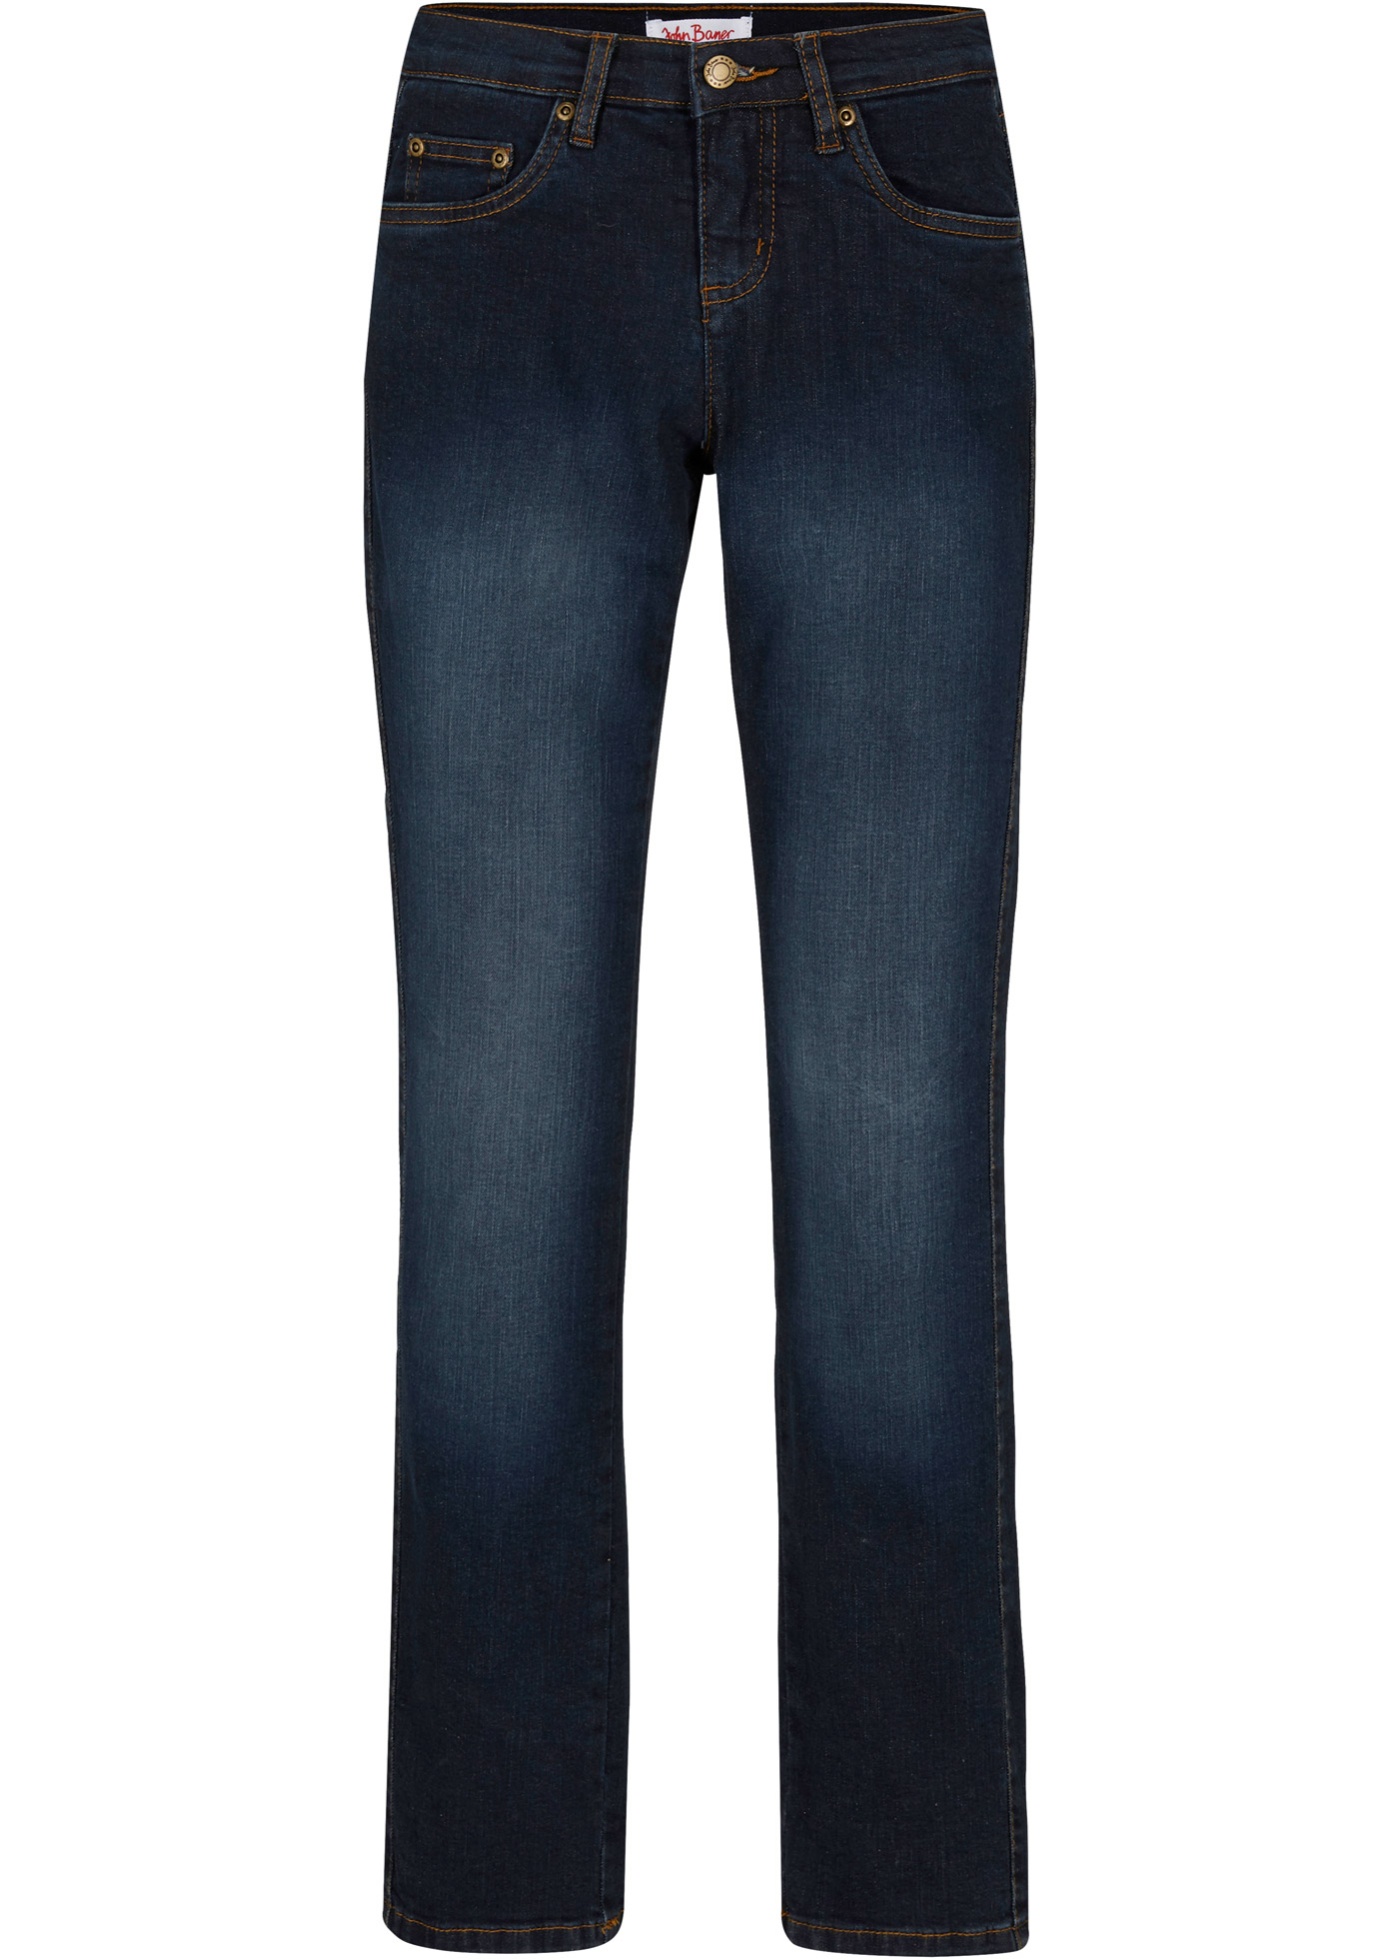 Corrigerende bestseller stretch jeans, straight